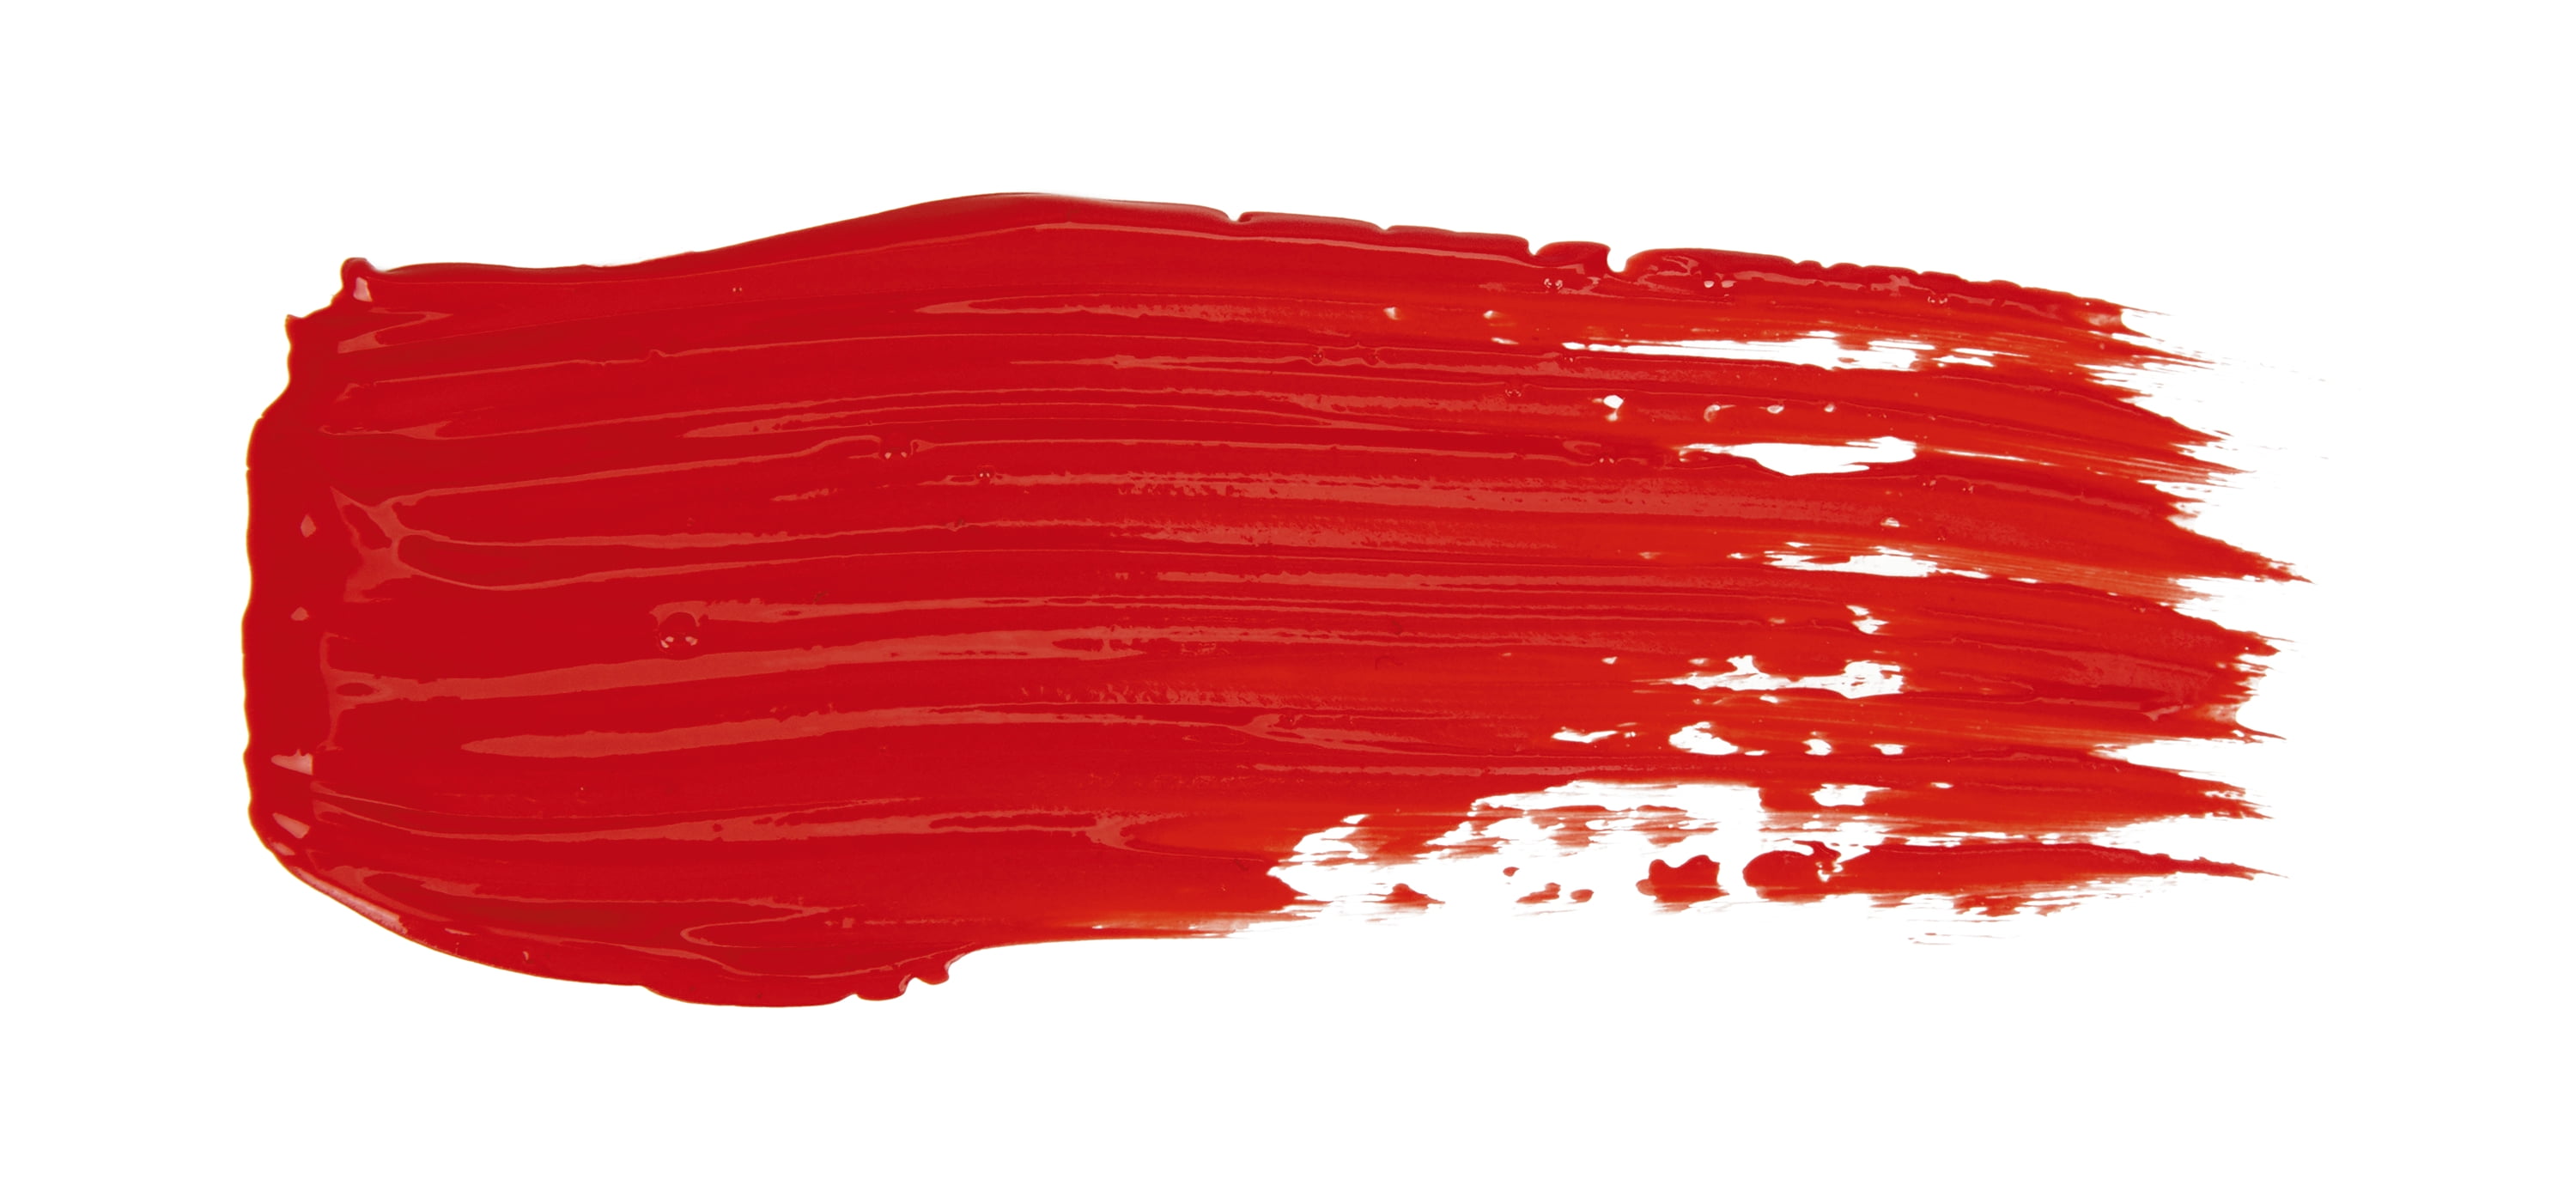 Crayola 204016115 Portfolio Series 16 oz. Red Acrylic Paint